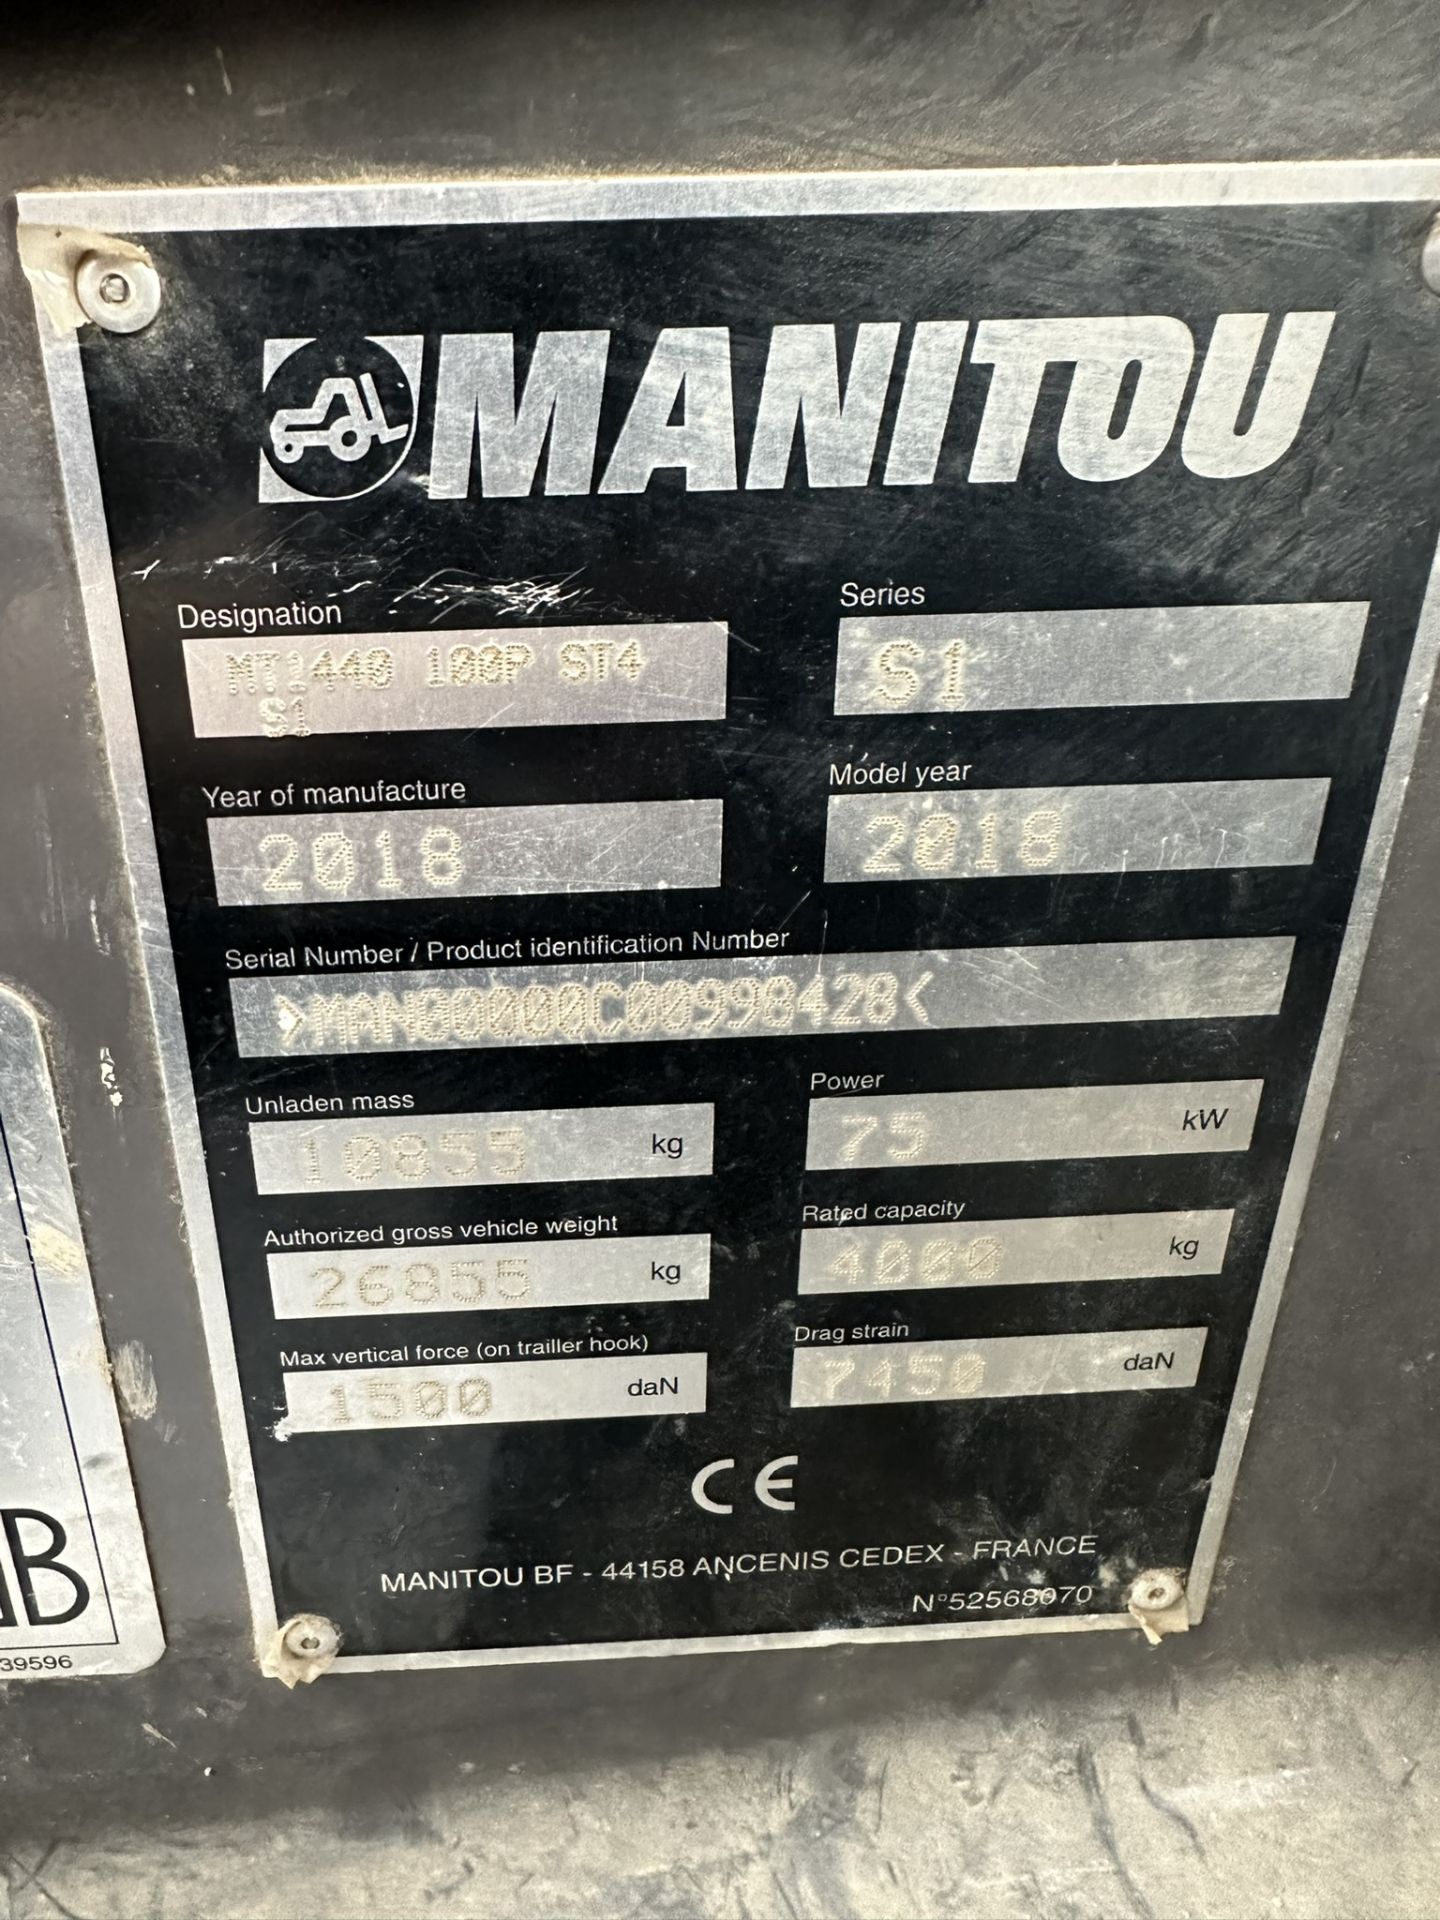 Manitou MT1440 Turbo Telehandler | YOM: 2018 | Hours: 4,211 - Image 9 of 11